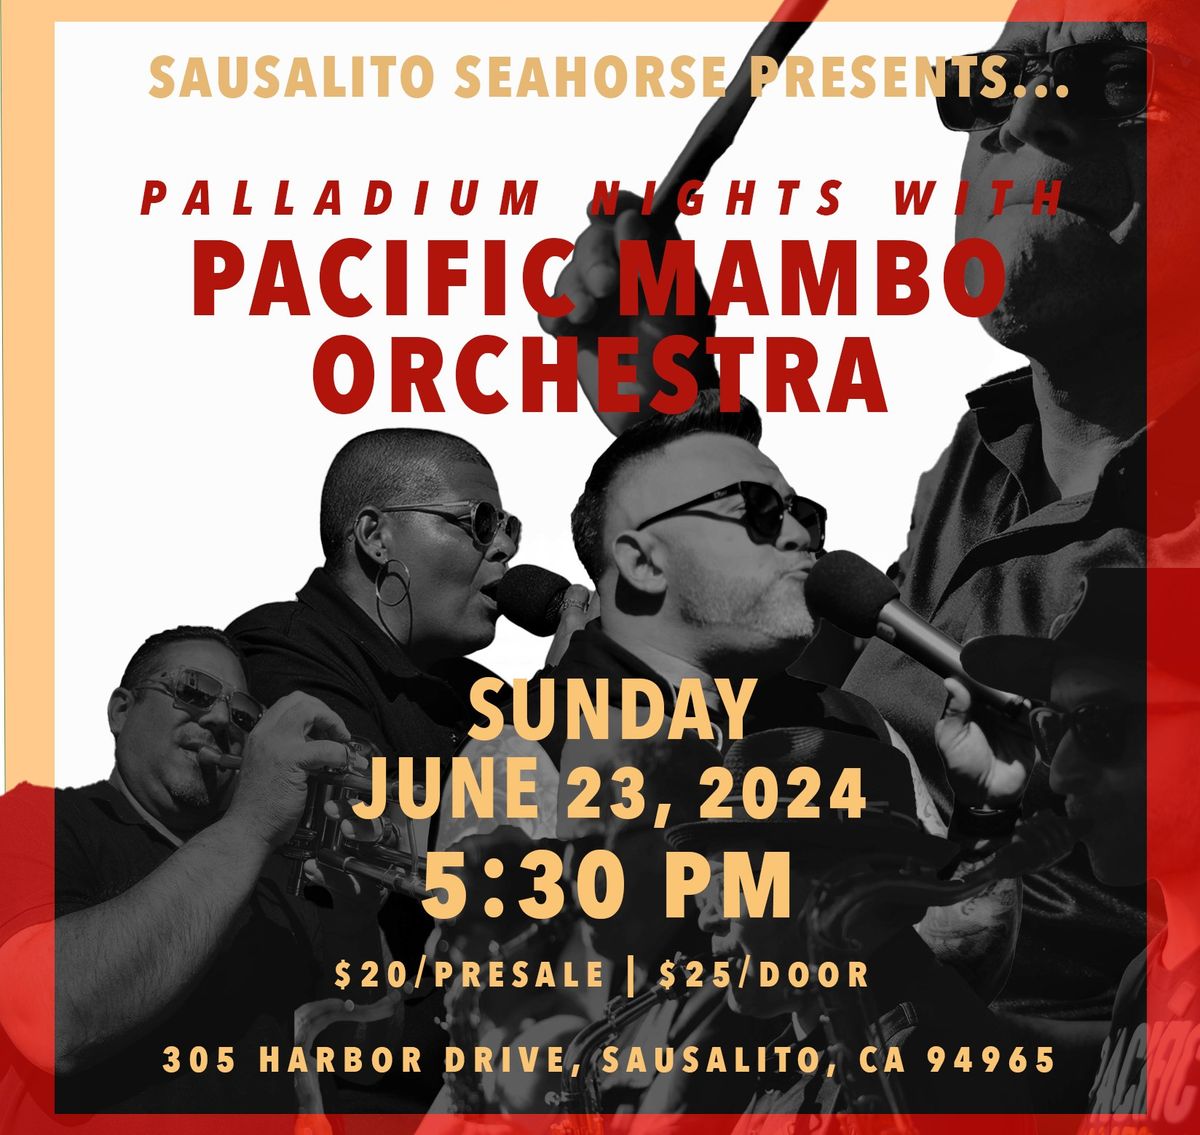 Sausalito Seahorse presents "Palladium Nights with Pacific Mambo Orchestra"